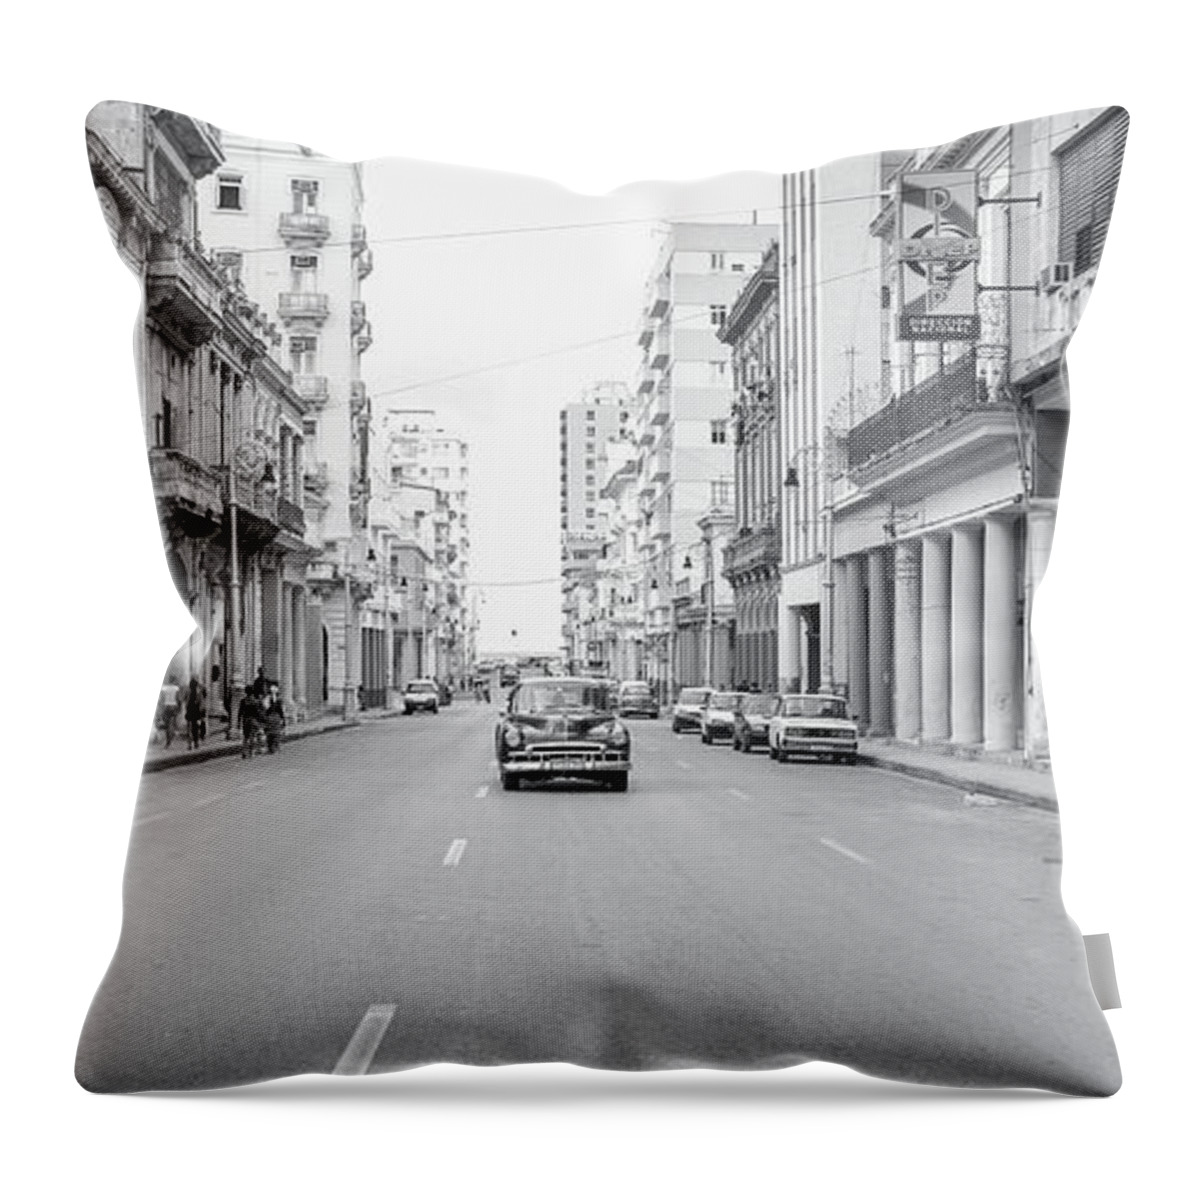 Cuba Throw Pillow featuring the photograph City Street, Havana by Mark Duehmig